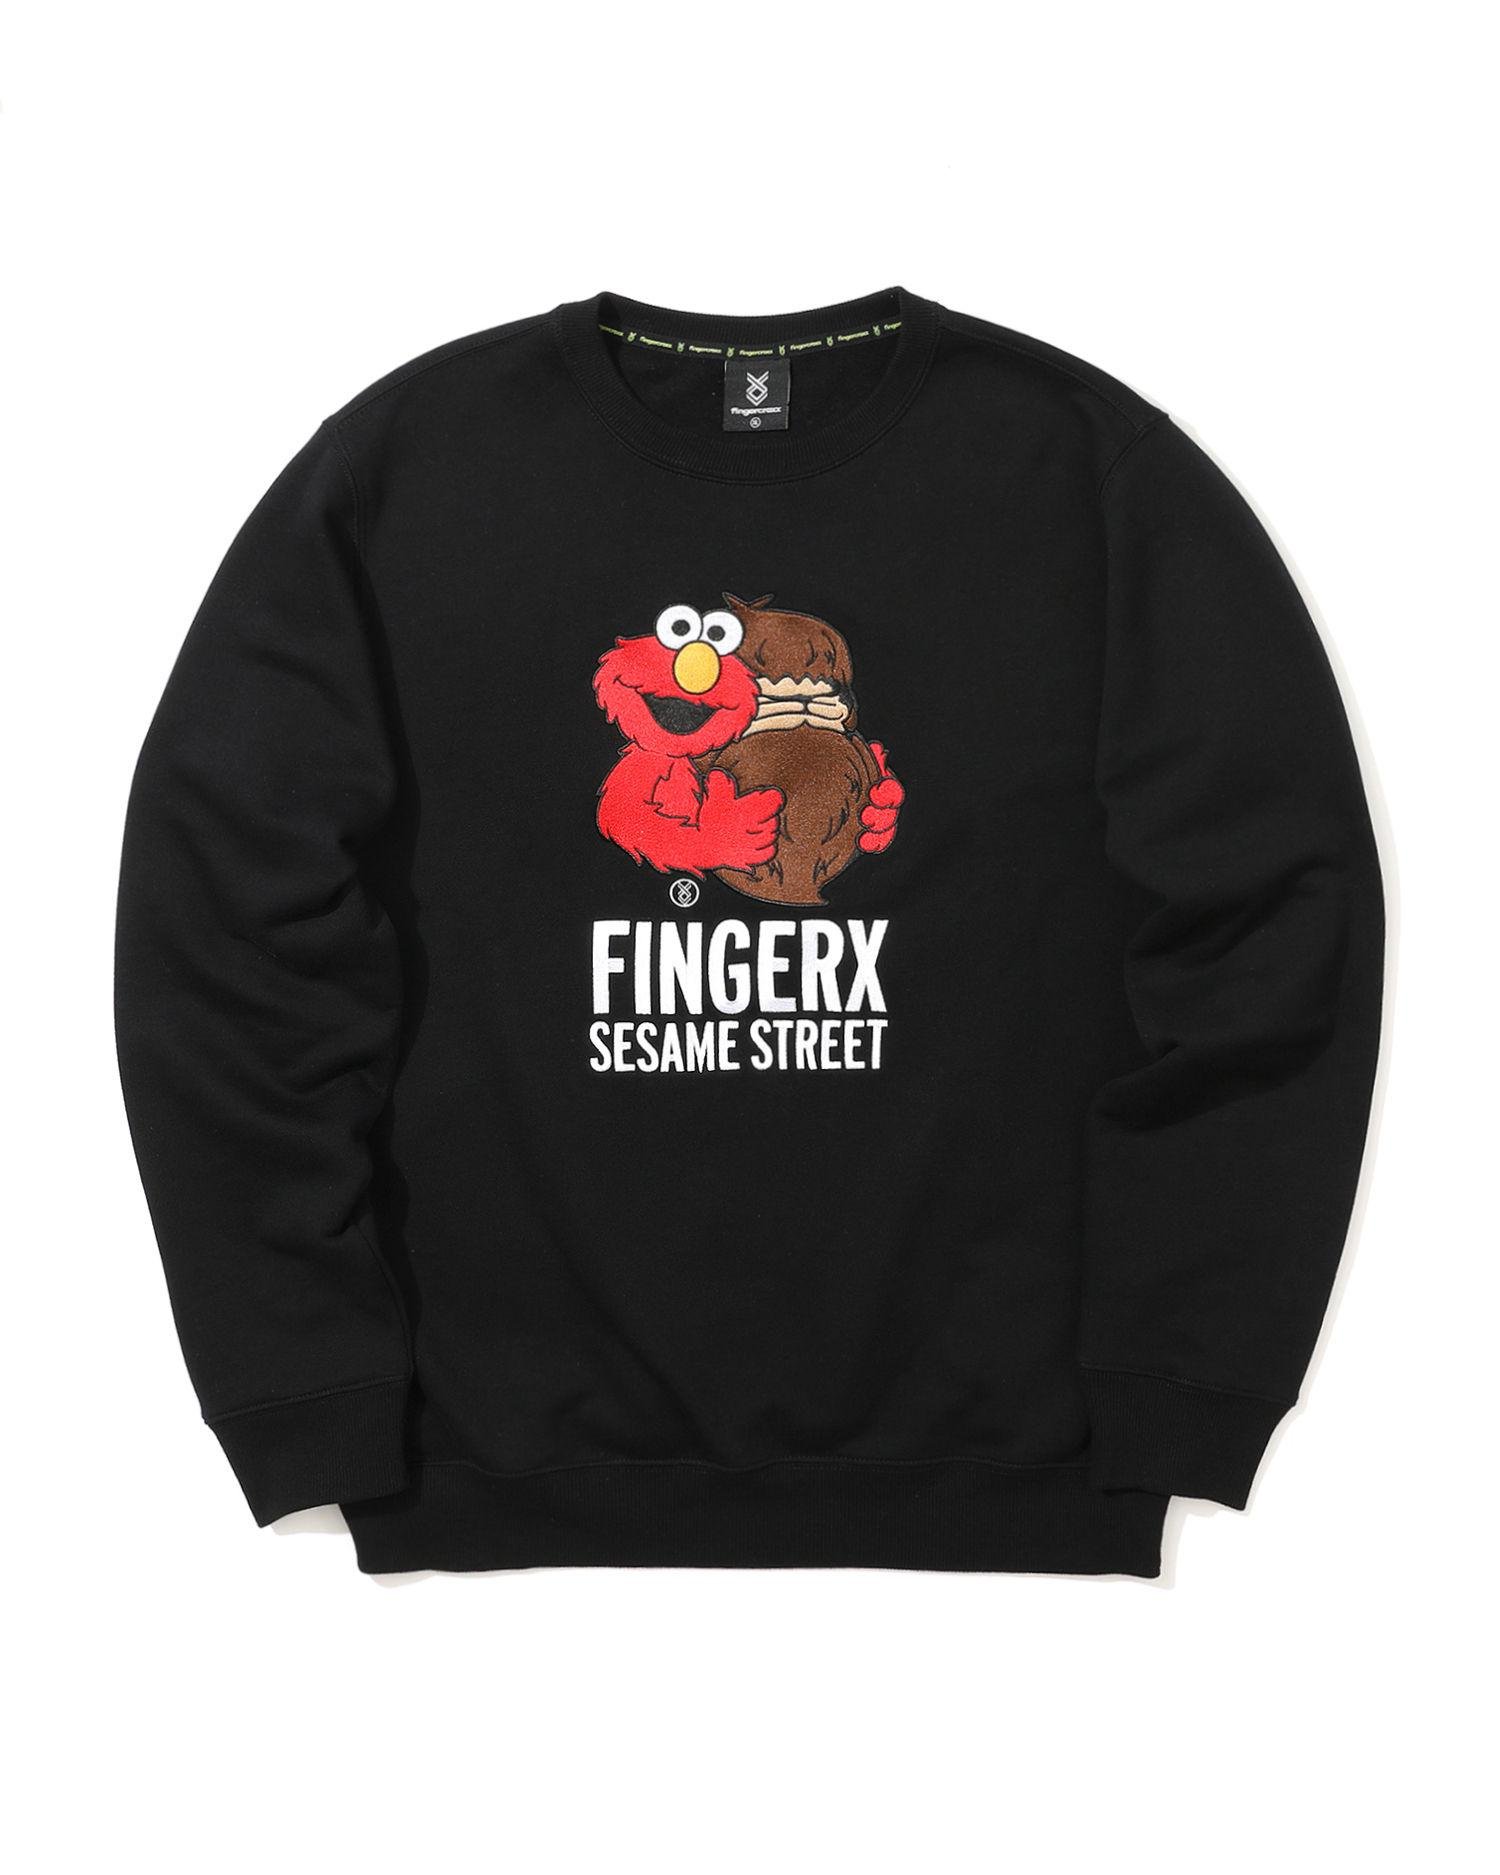 X Sesame Street Elmo print sweatshirt by FINGERCROXX